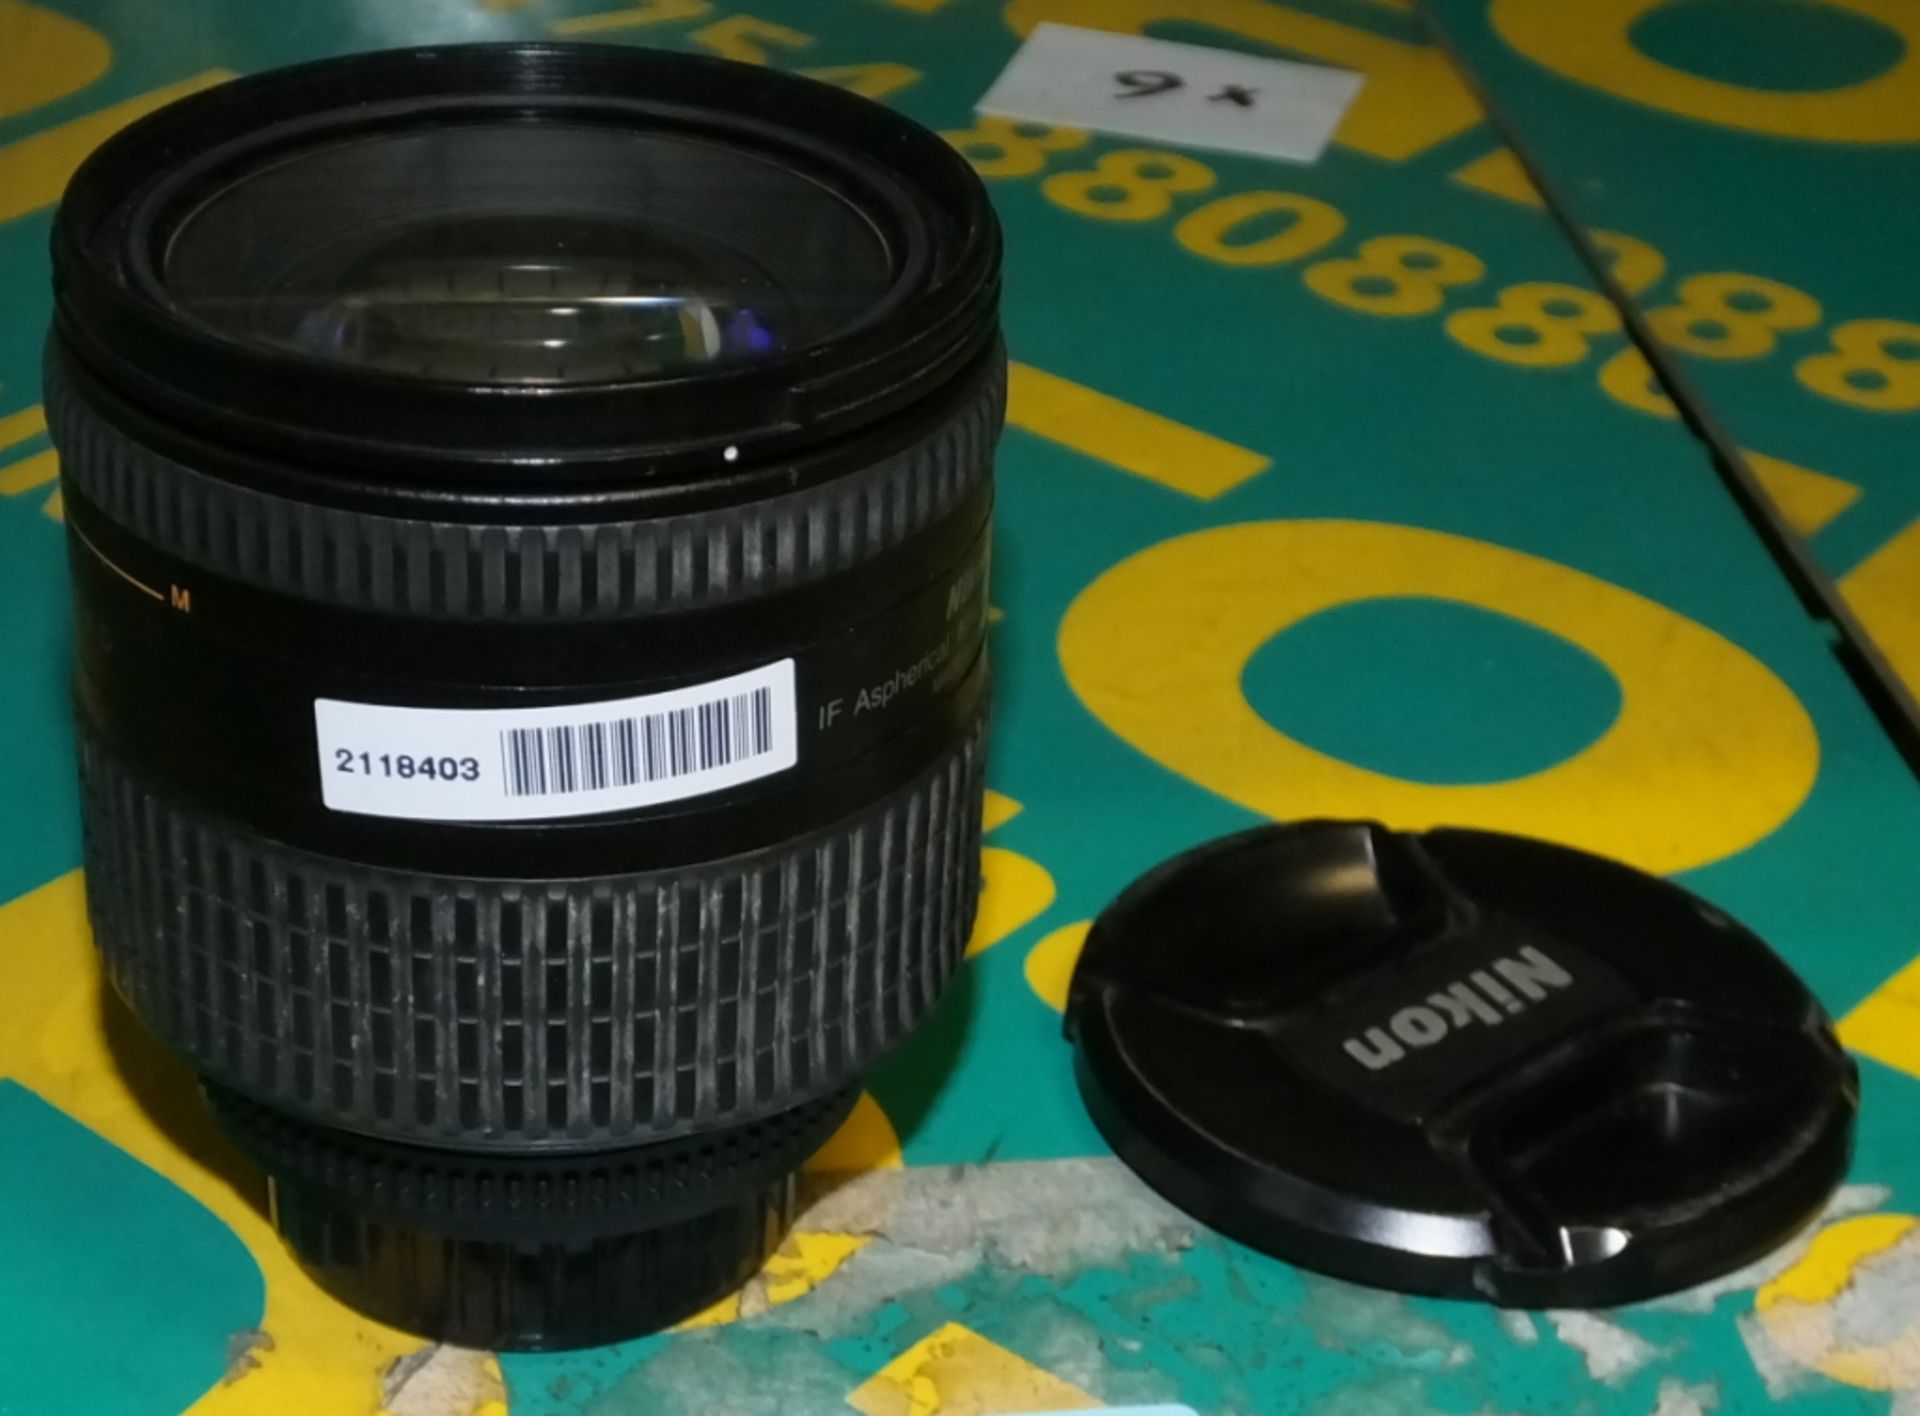 Nikon IF aspherical MACRO (1.2) Lens